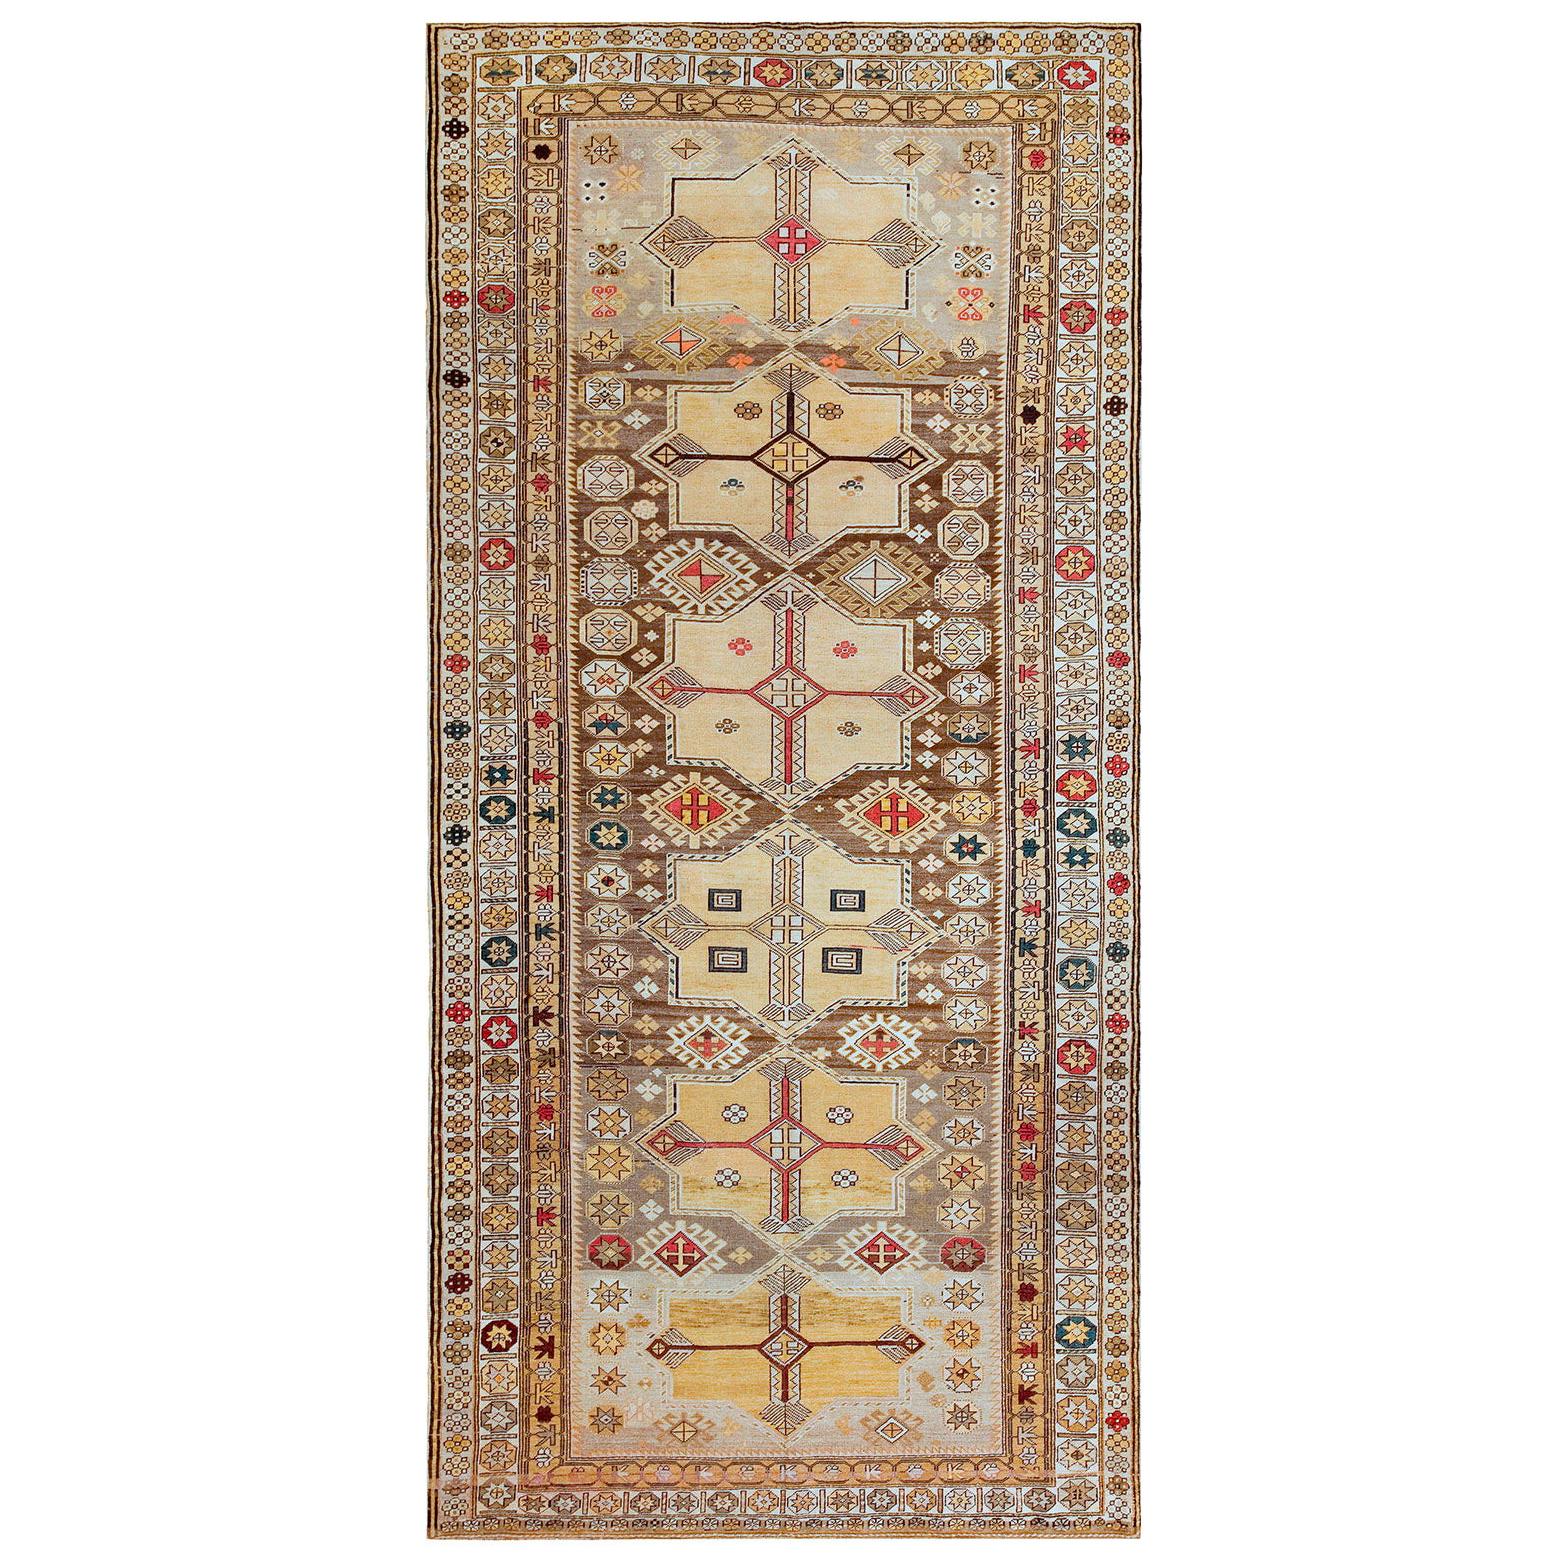 Late 19th Century Caucasian Shirvan Carpet ( 4'10" x 10'3" - 147 x 312 ) For Sale